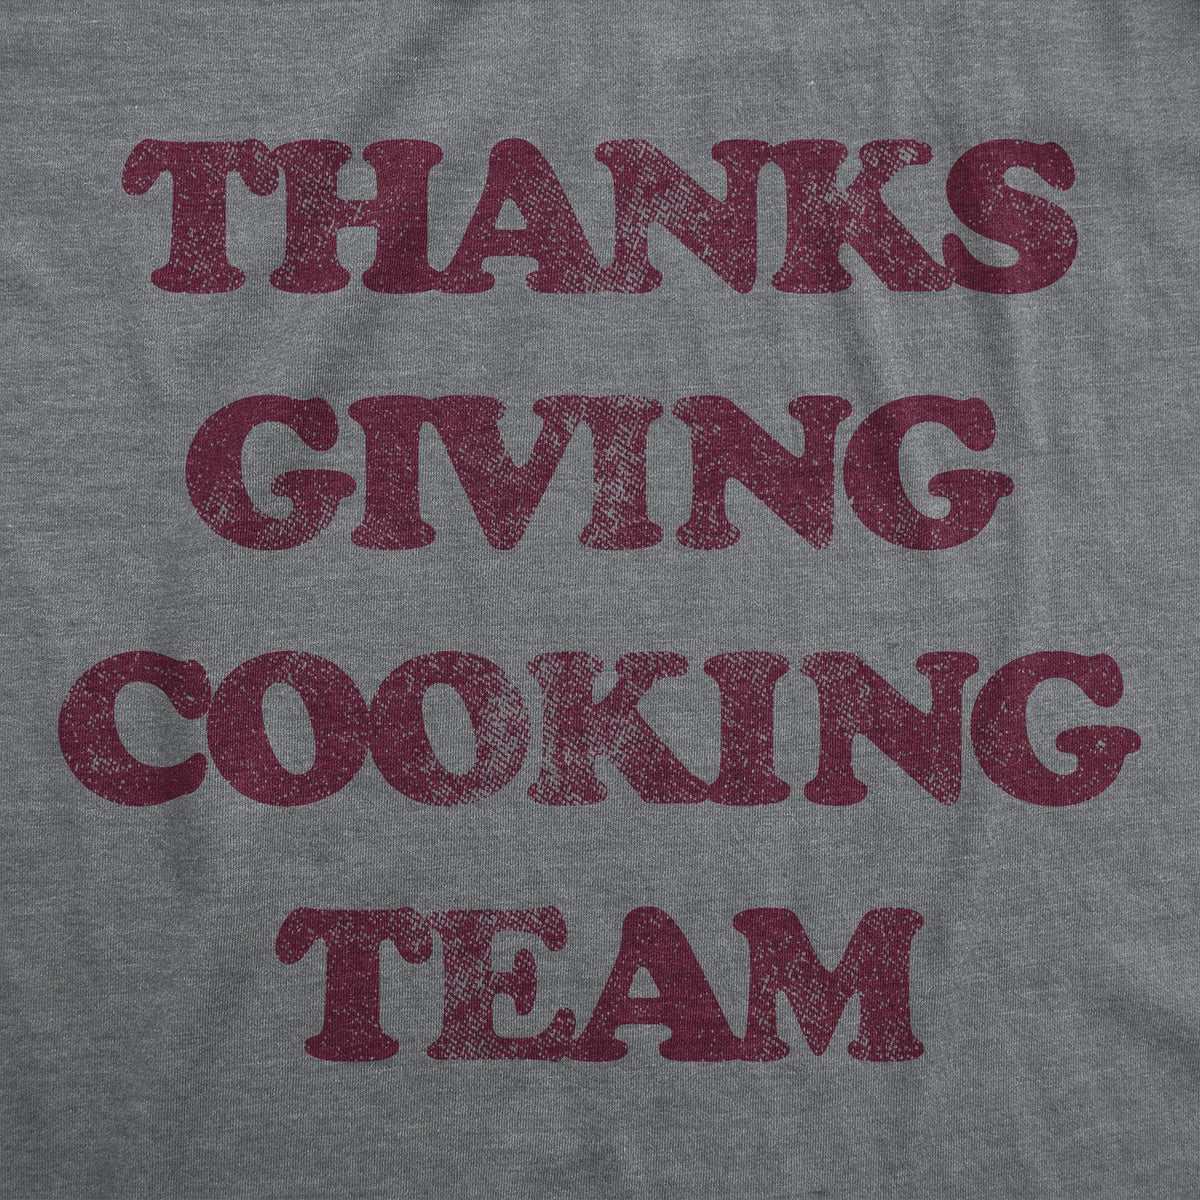 Thanksgiving Cooking Team Men&#39;s Tshirt  -  Crazy Dog T-Shirts